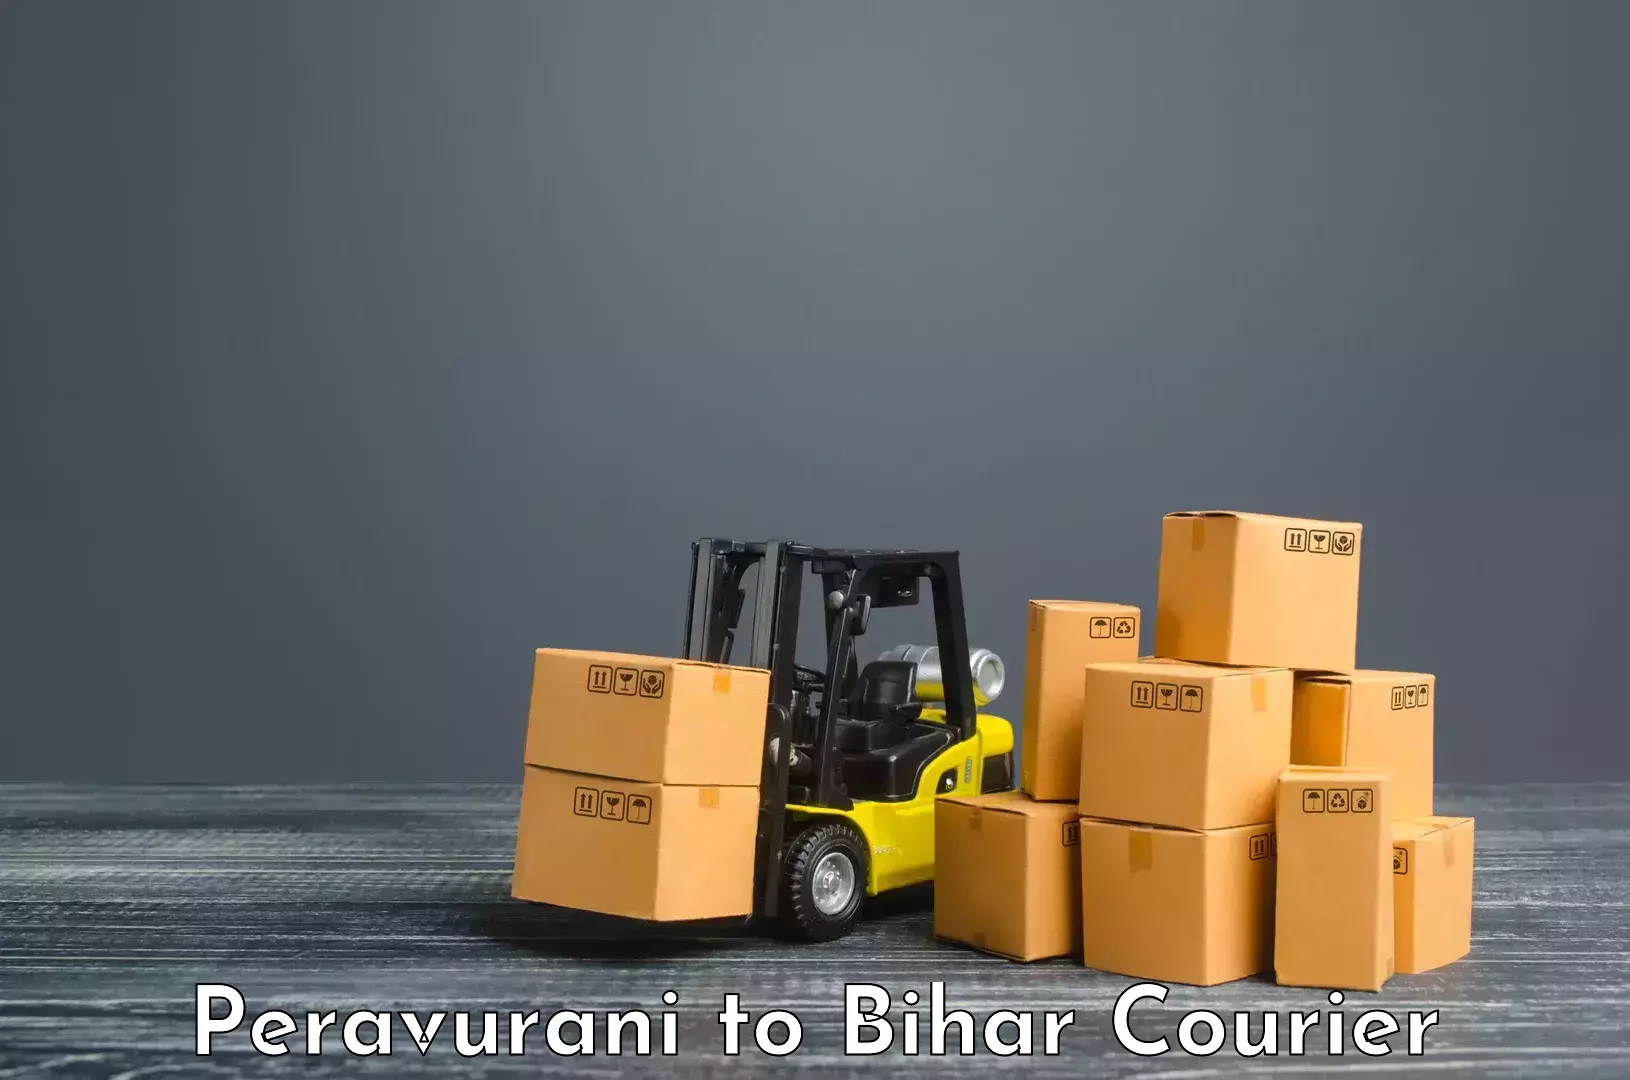 Courier service innovation Peravurani to Runni Saidpur